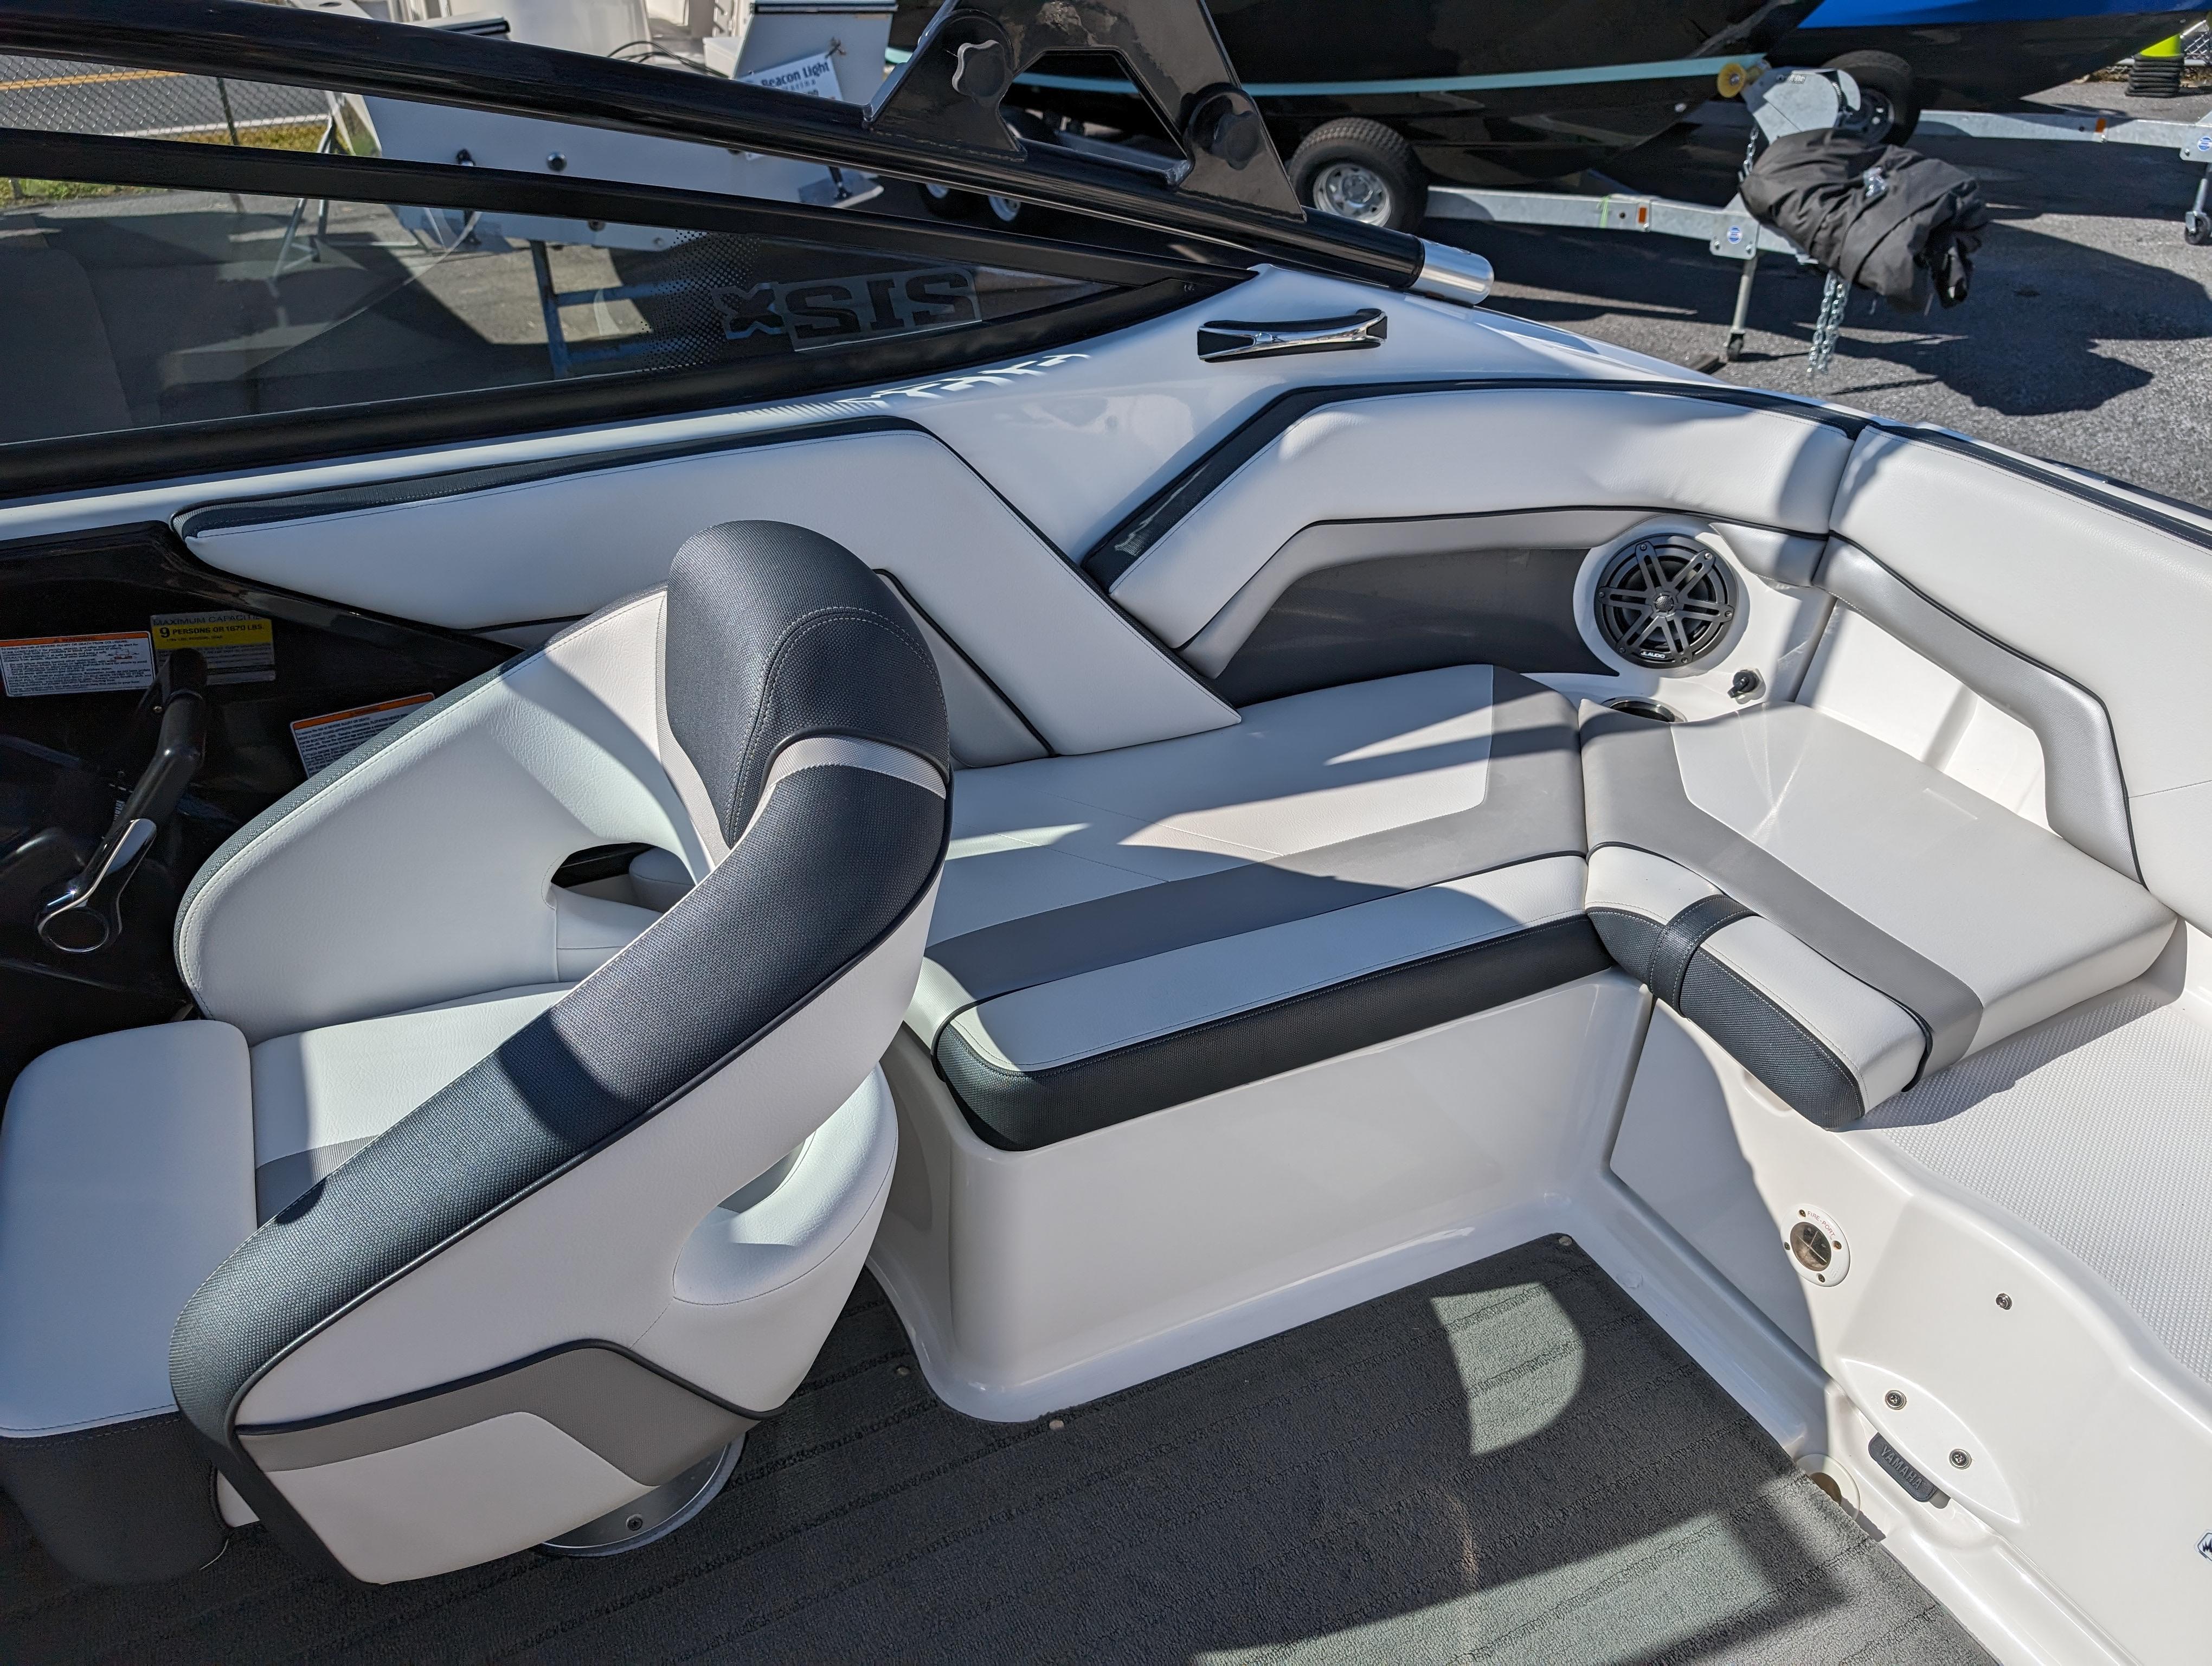 2015 Yamaha Boats 212X